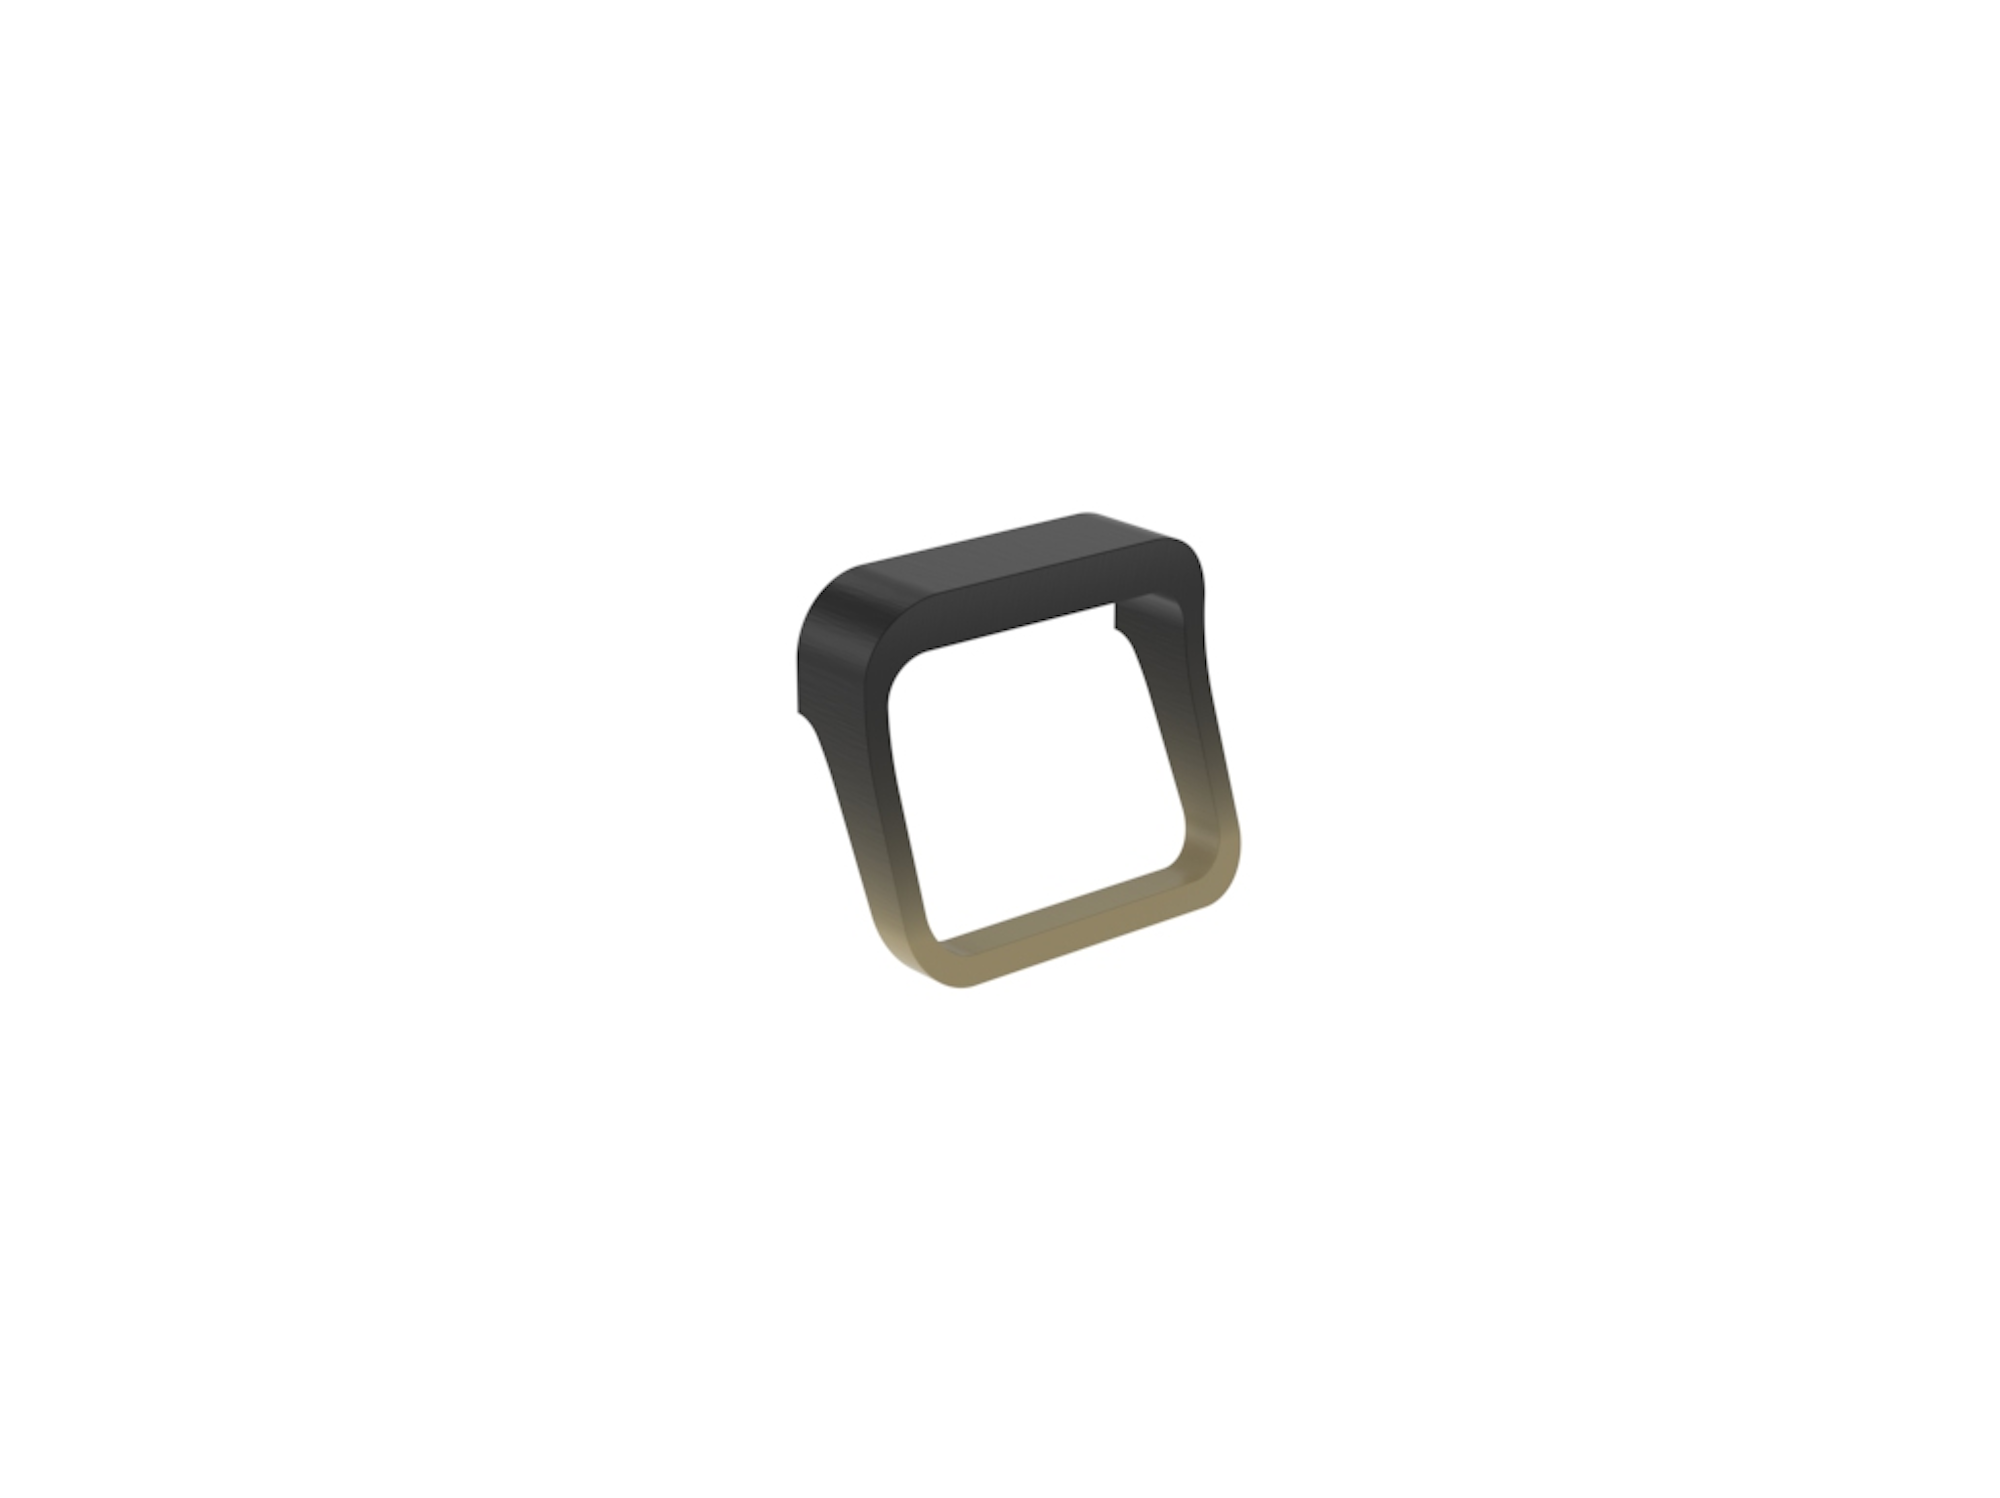 TALLINN 65mm handle - Ombre (Black & Gold) - 32mm Centres